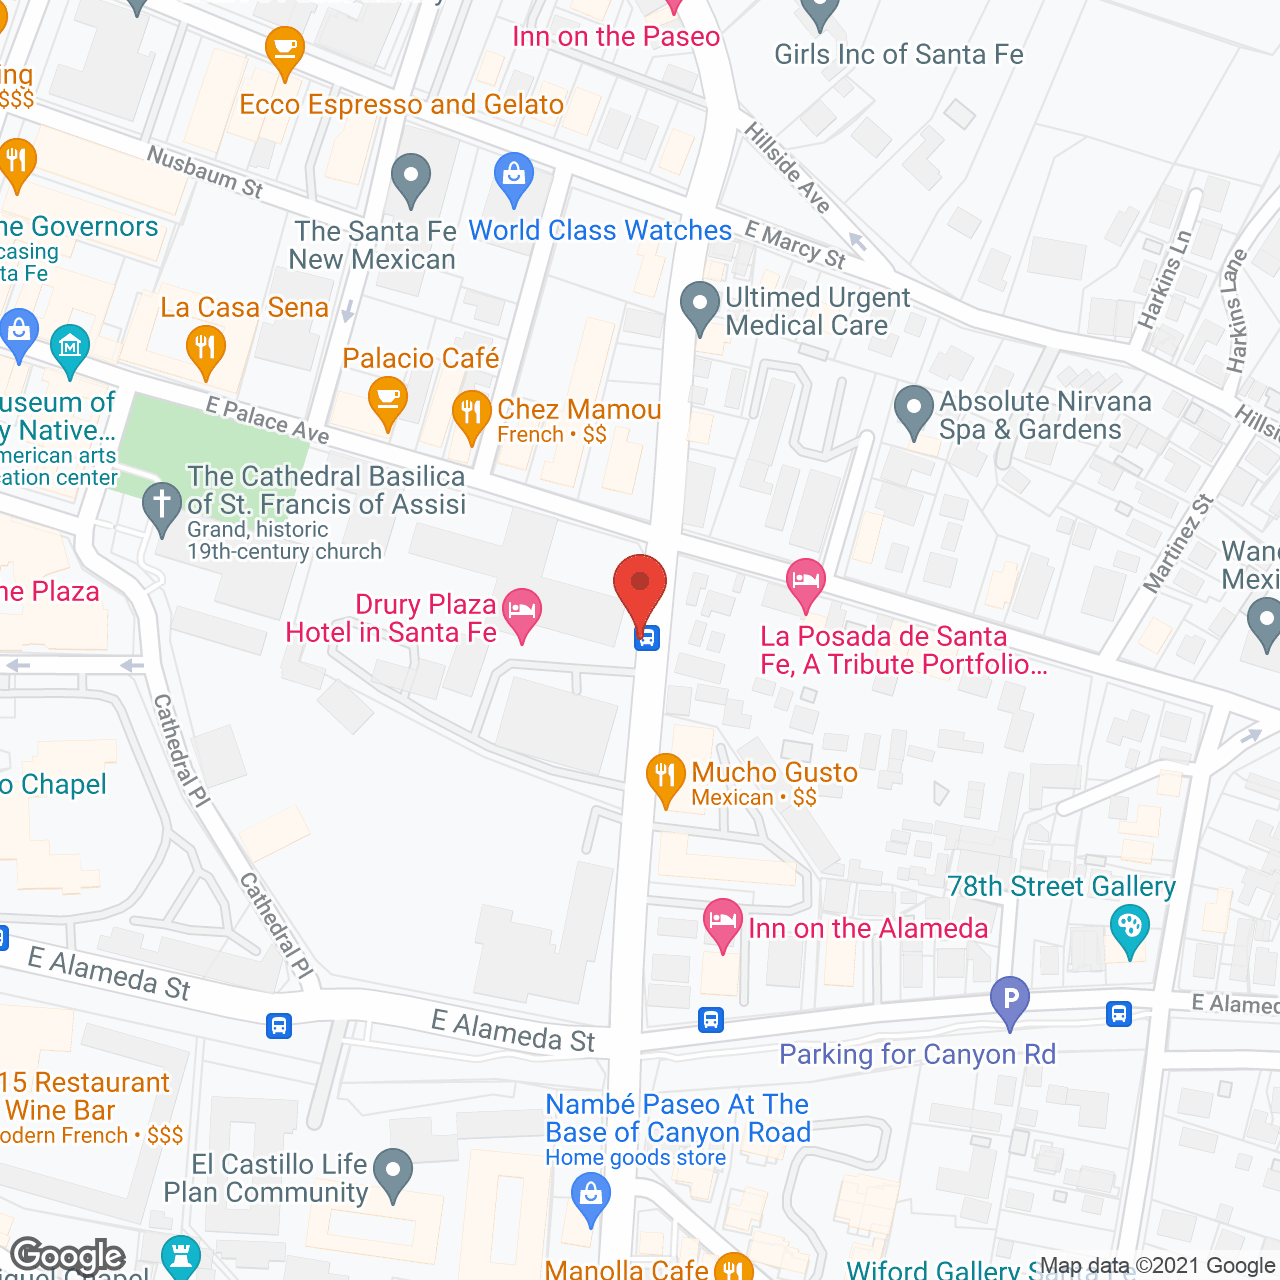 La Residencia Nursing Ctr in google map